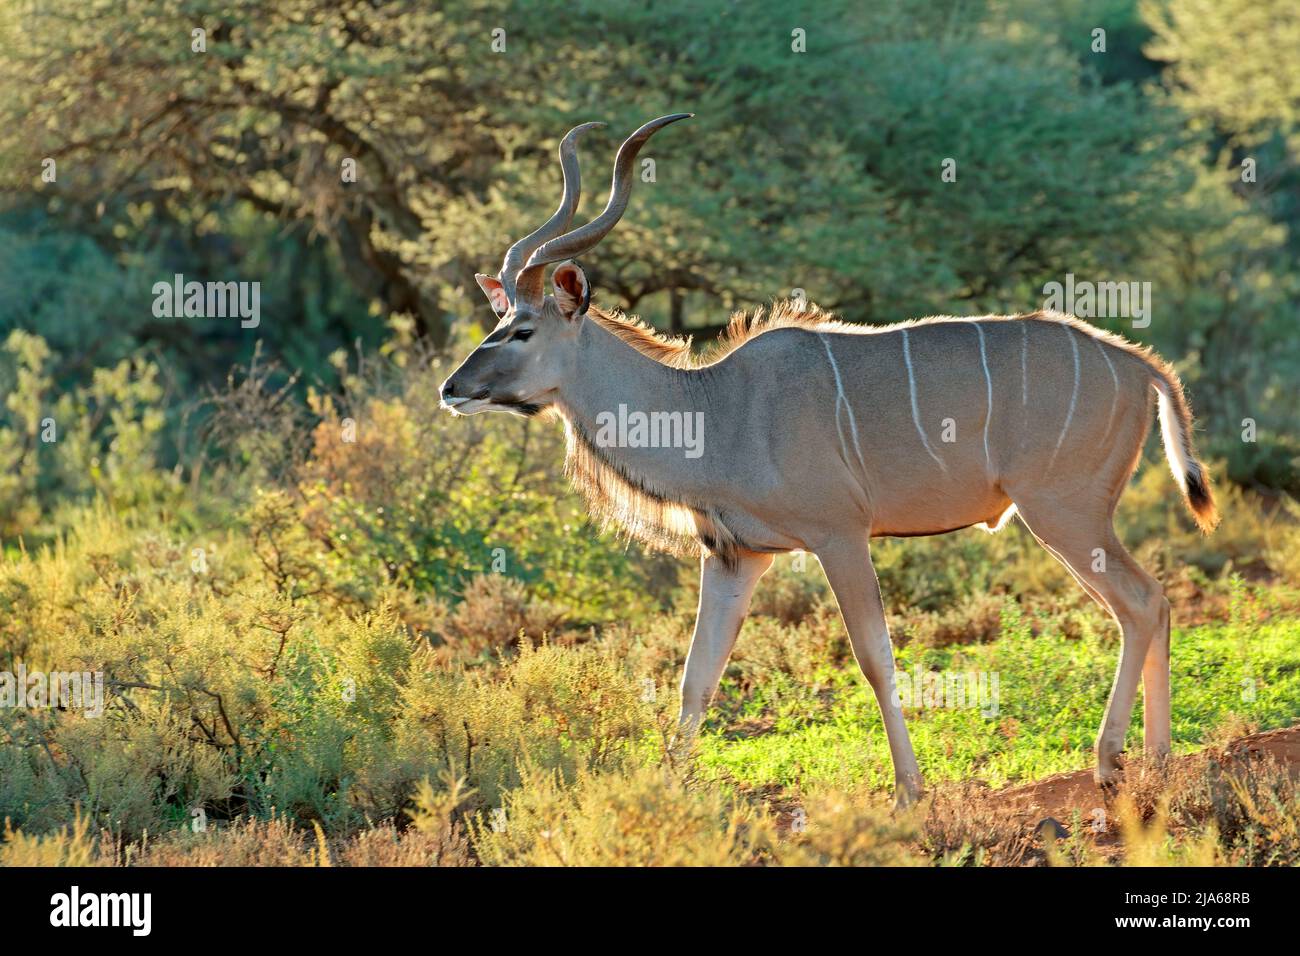 Antílope kudu macho (Tragelaphus strepsiceros) en su hábitat natural, Sudáfrica Foto de stock